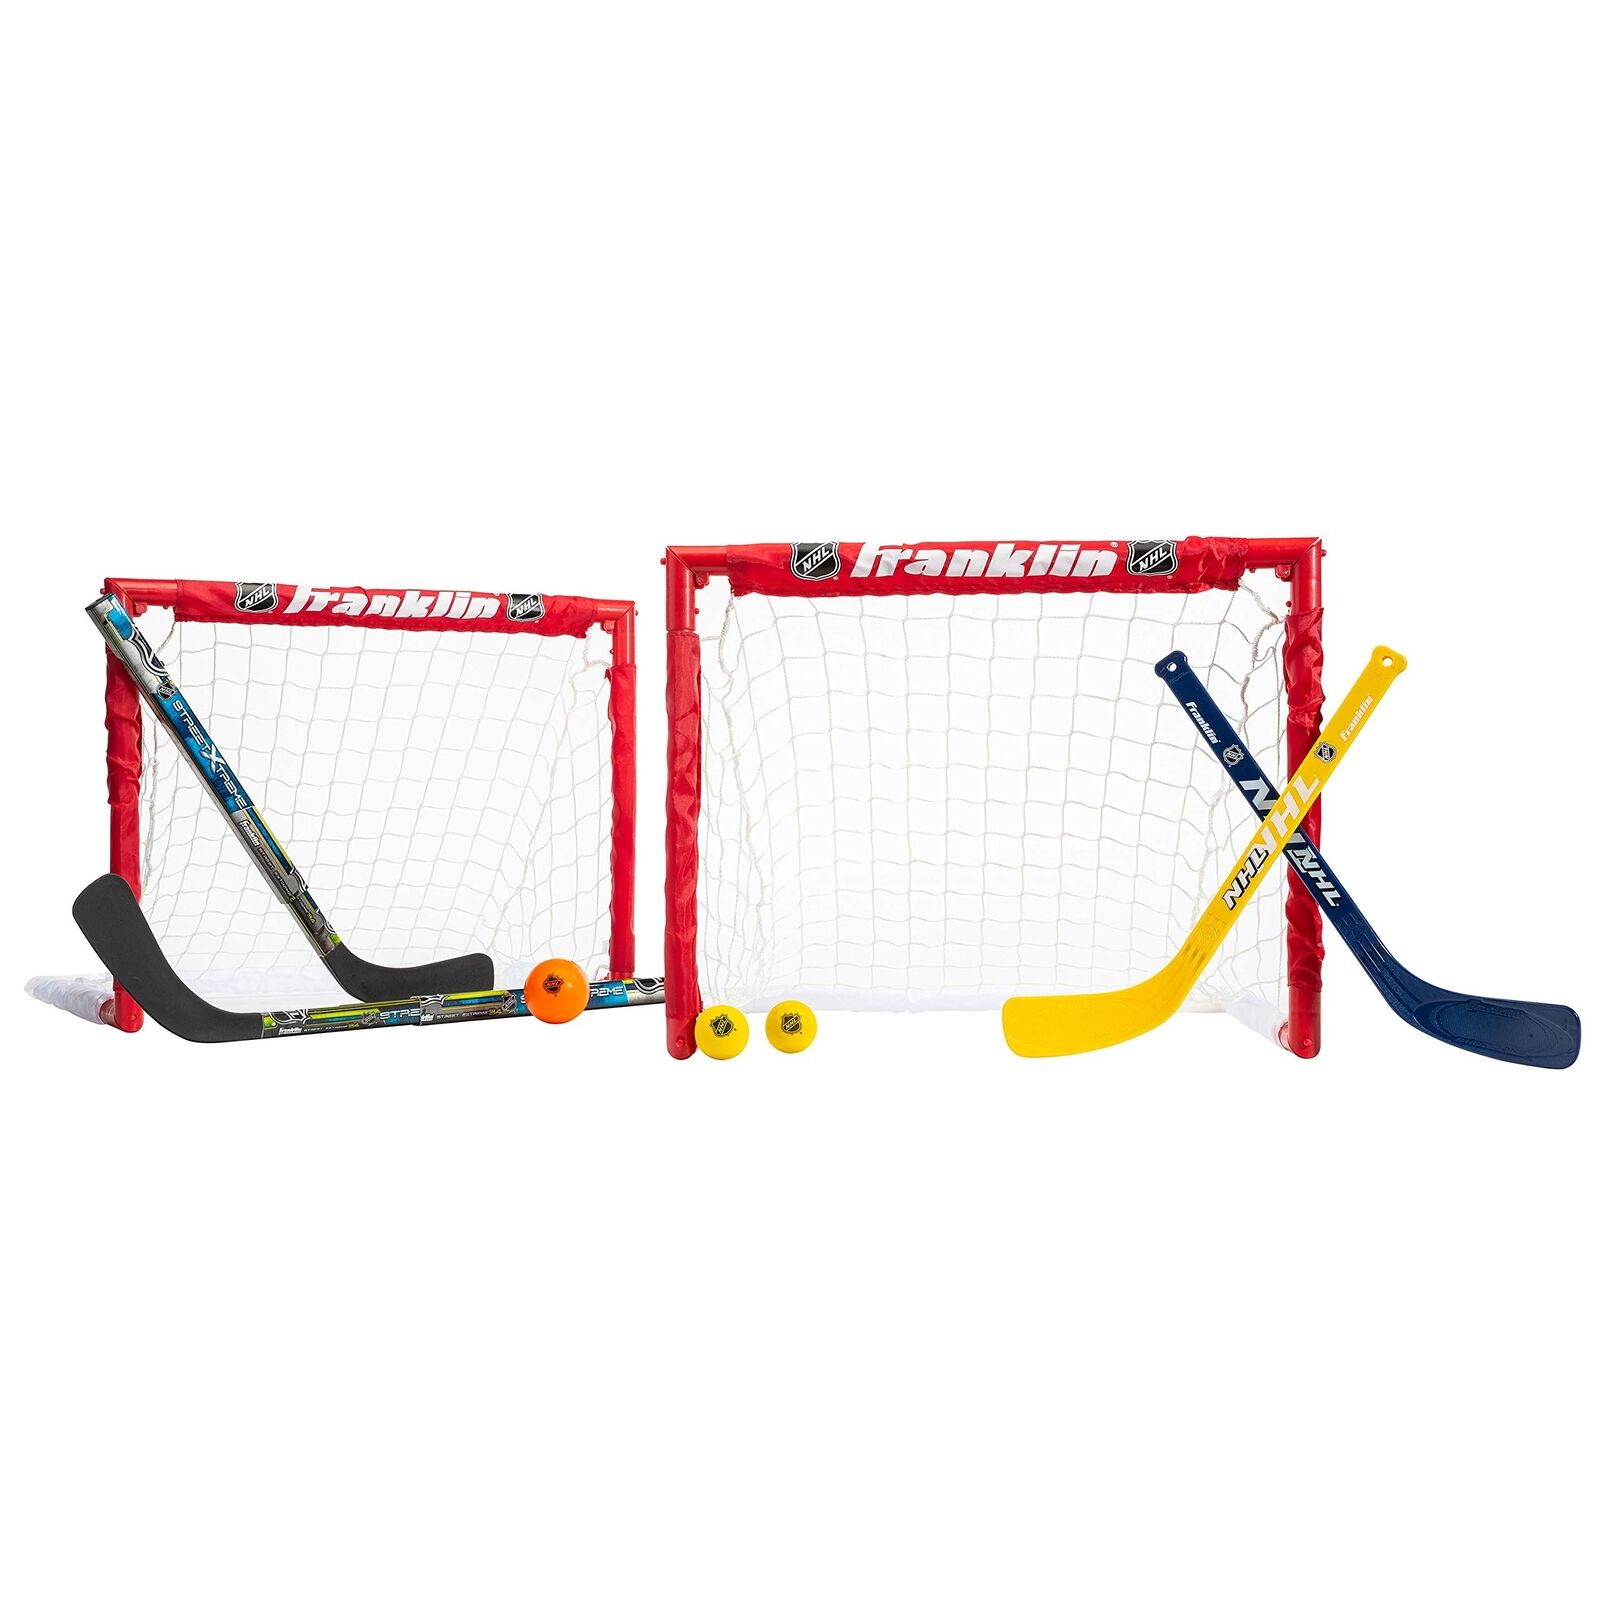 Franklin Sports - Nhl Kids Folding Hockey Goals Set - (2) Street Hockey & Kne...